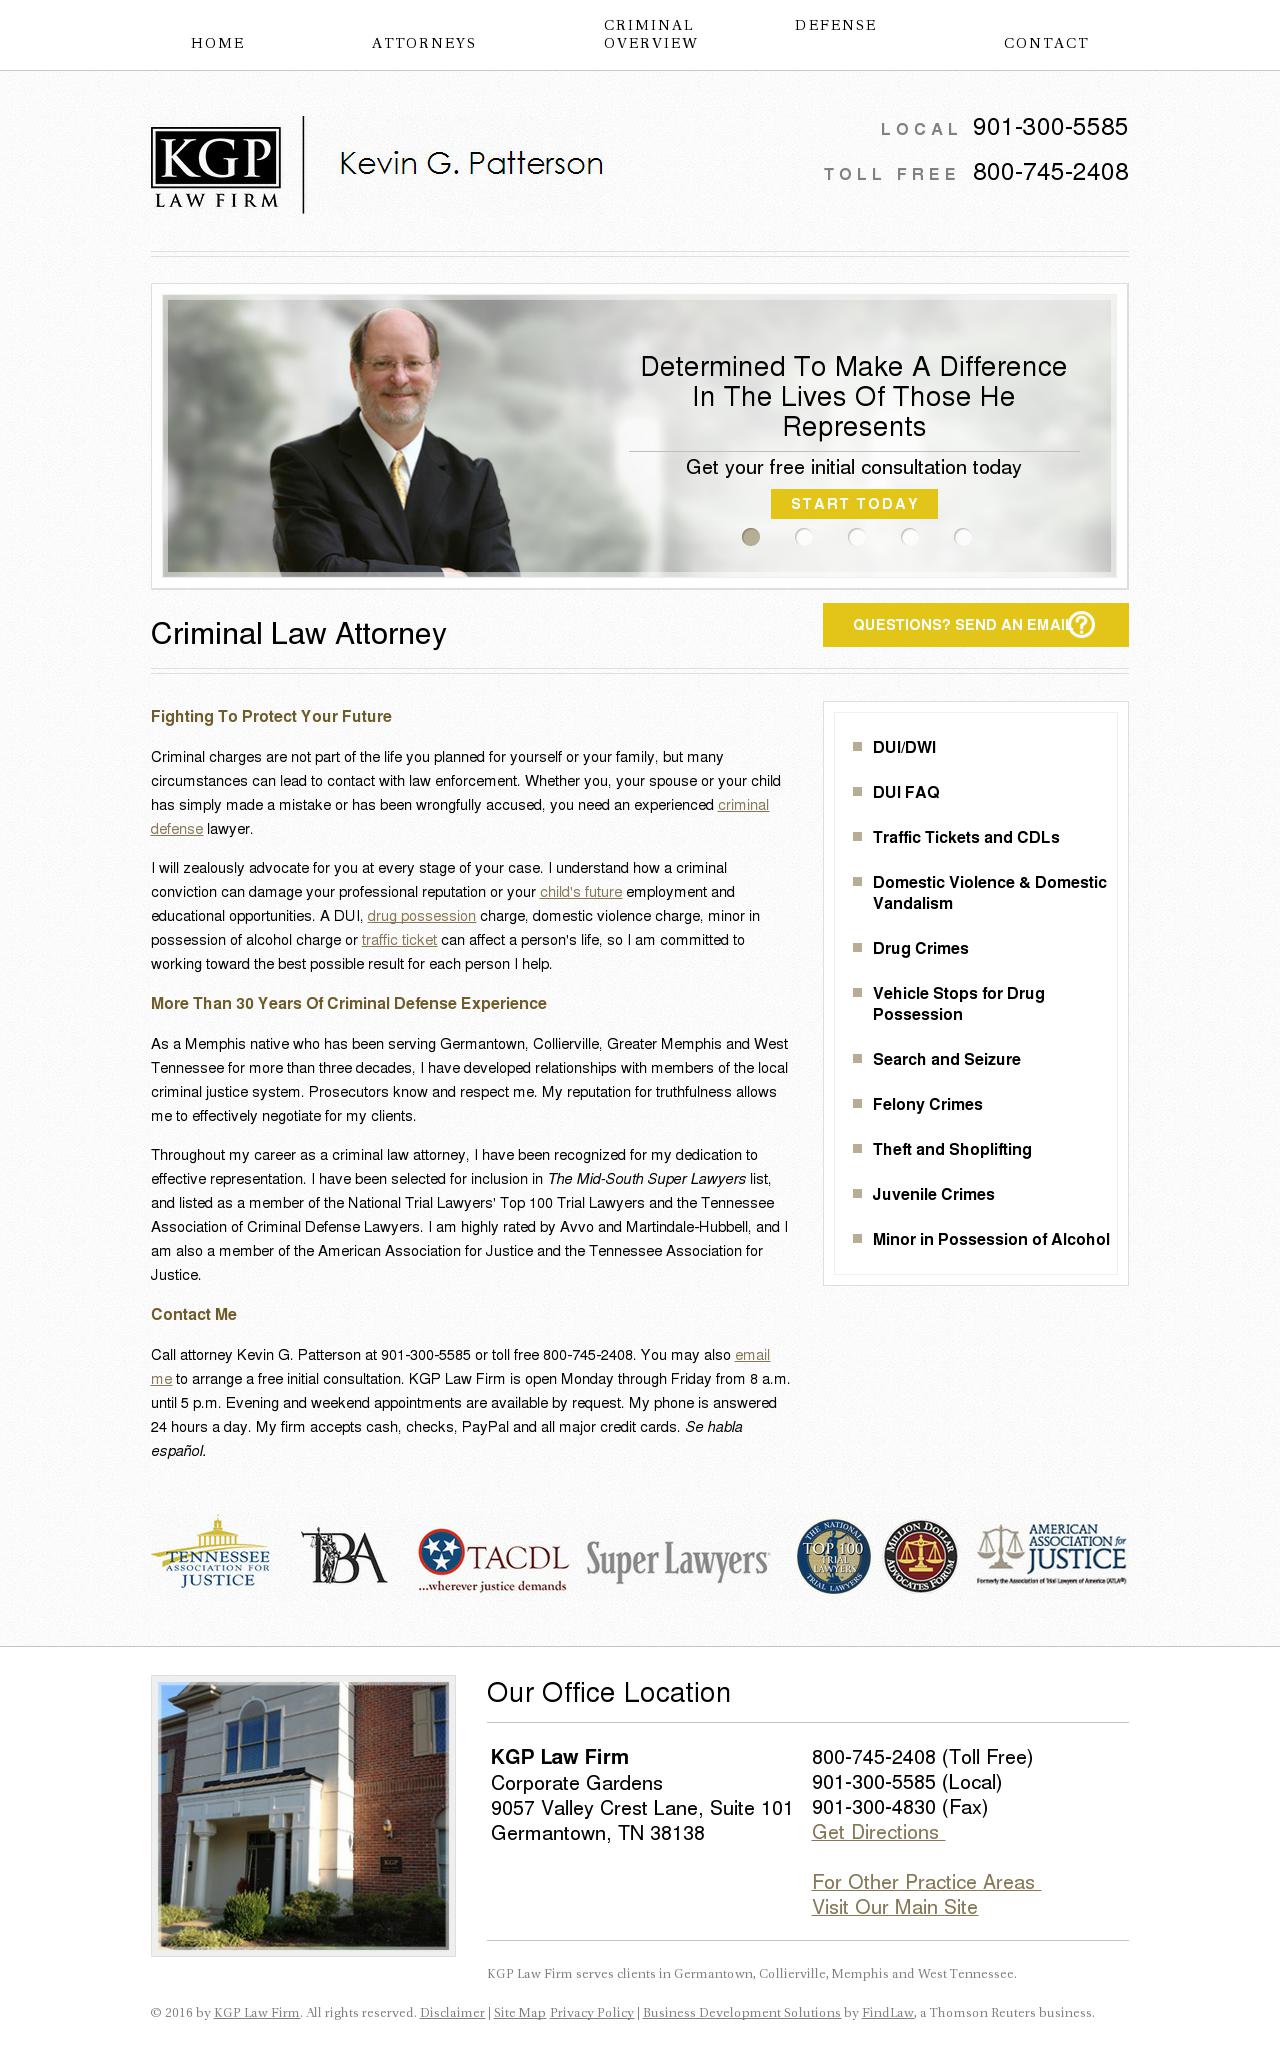 KGP Law Firm - Germantown TN Lawyers